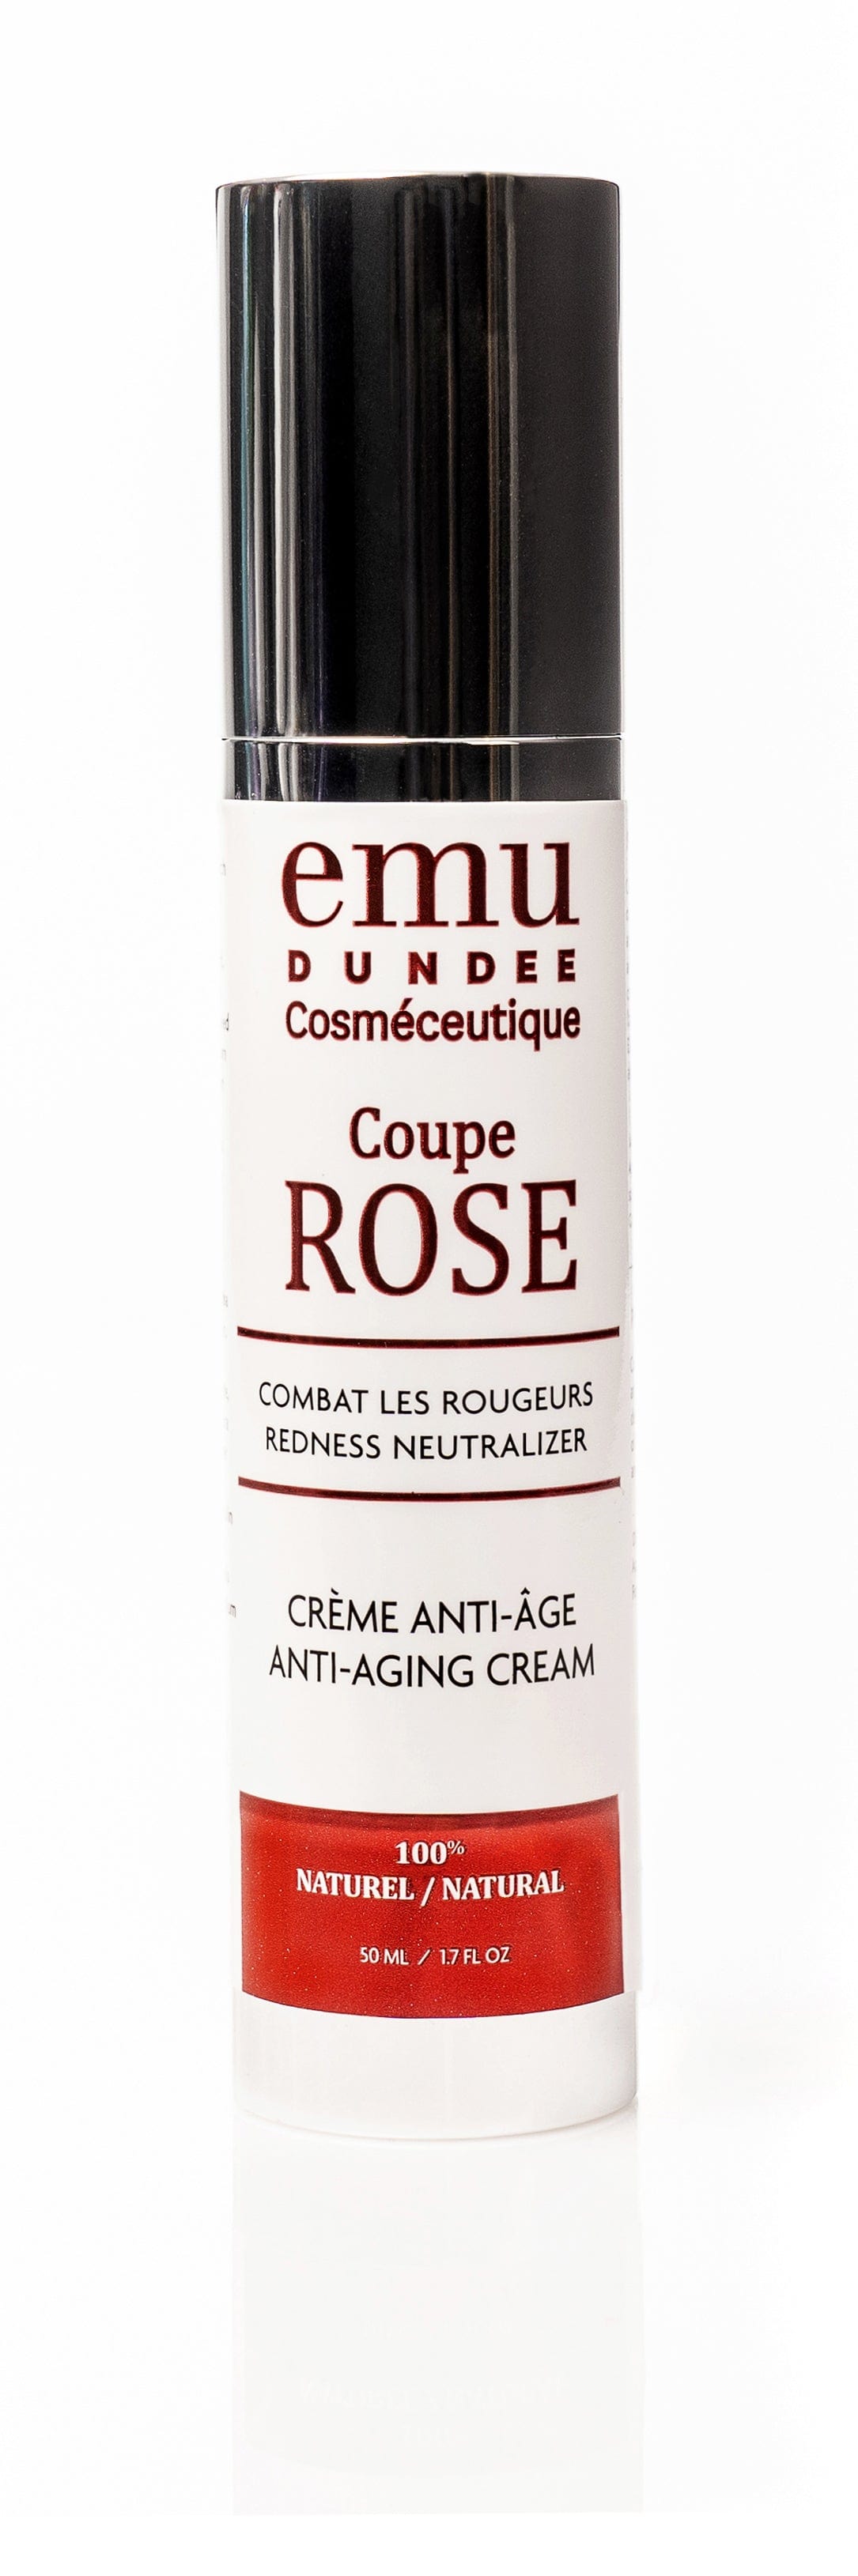 EMU DUNDEE Soins & beauté Crème anti-âge coupe rose 50ml